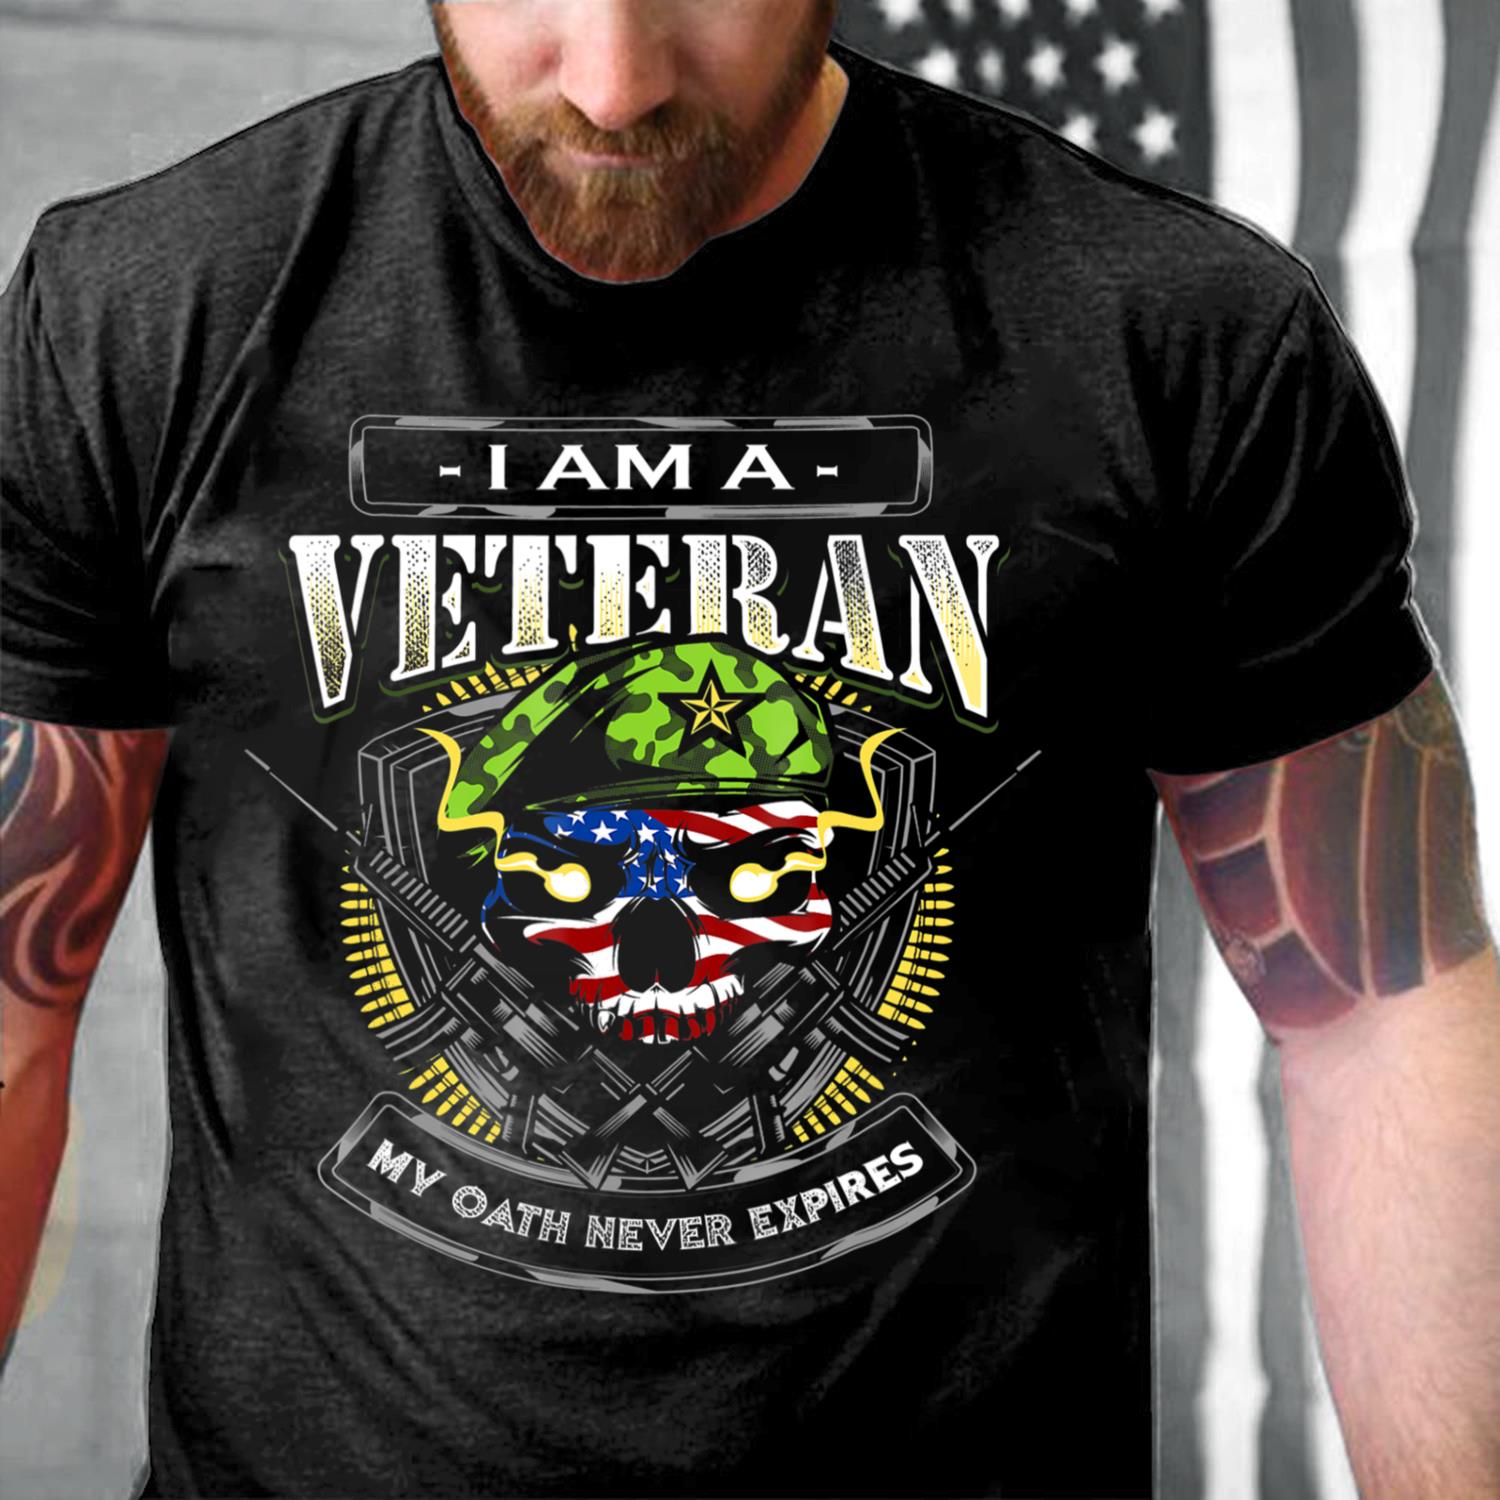 I Am A Veteran My Oath Never Expires T-Shirt